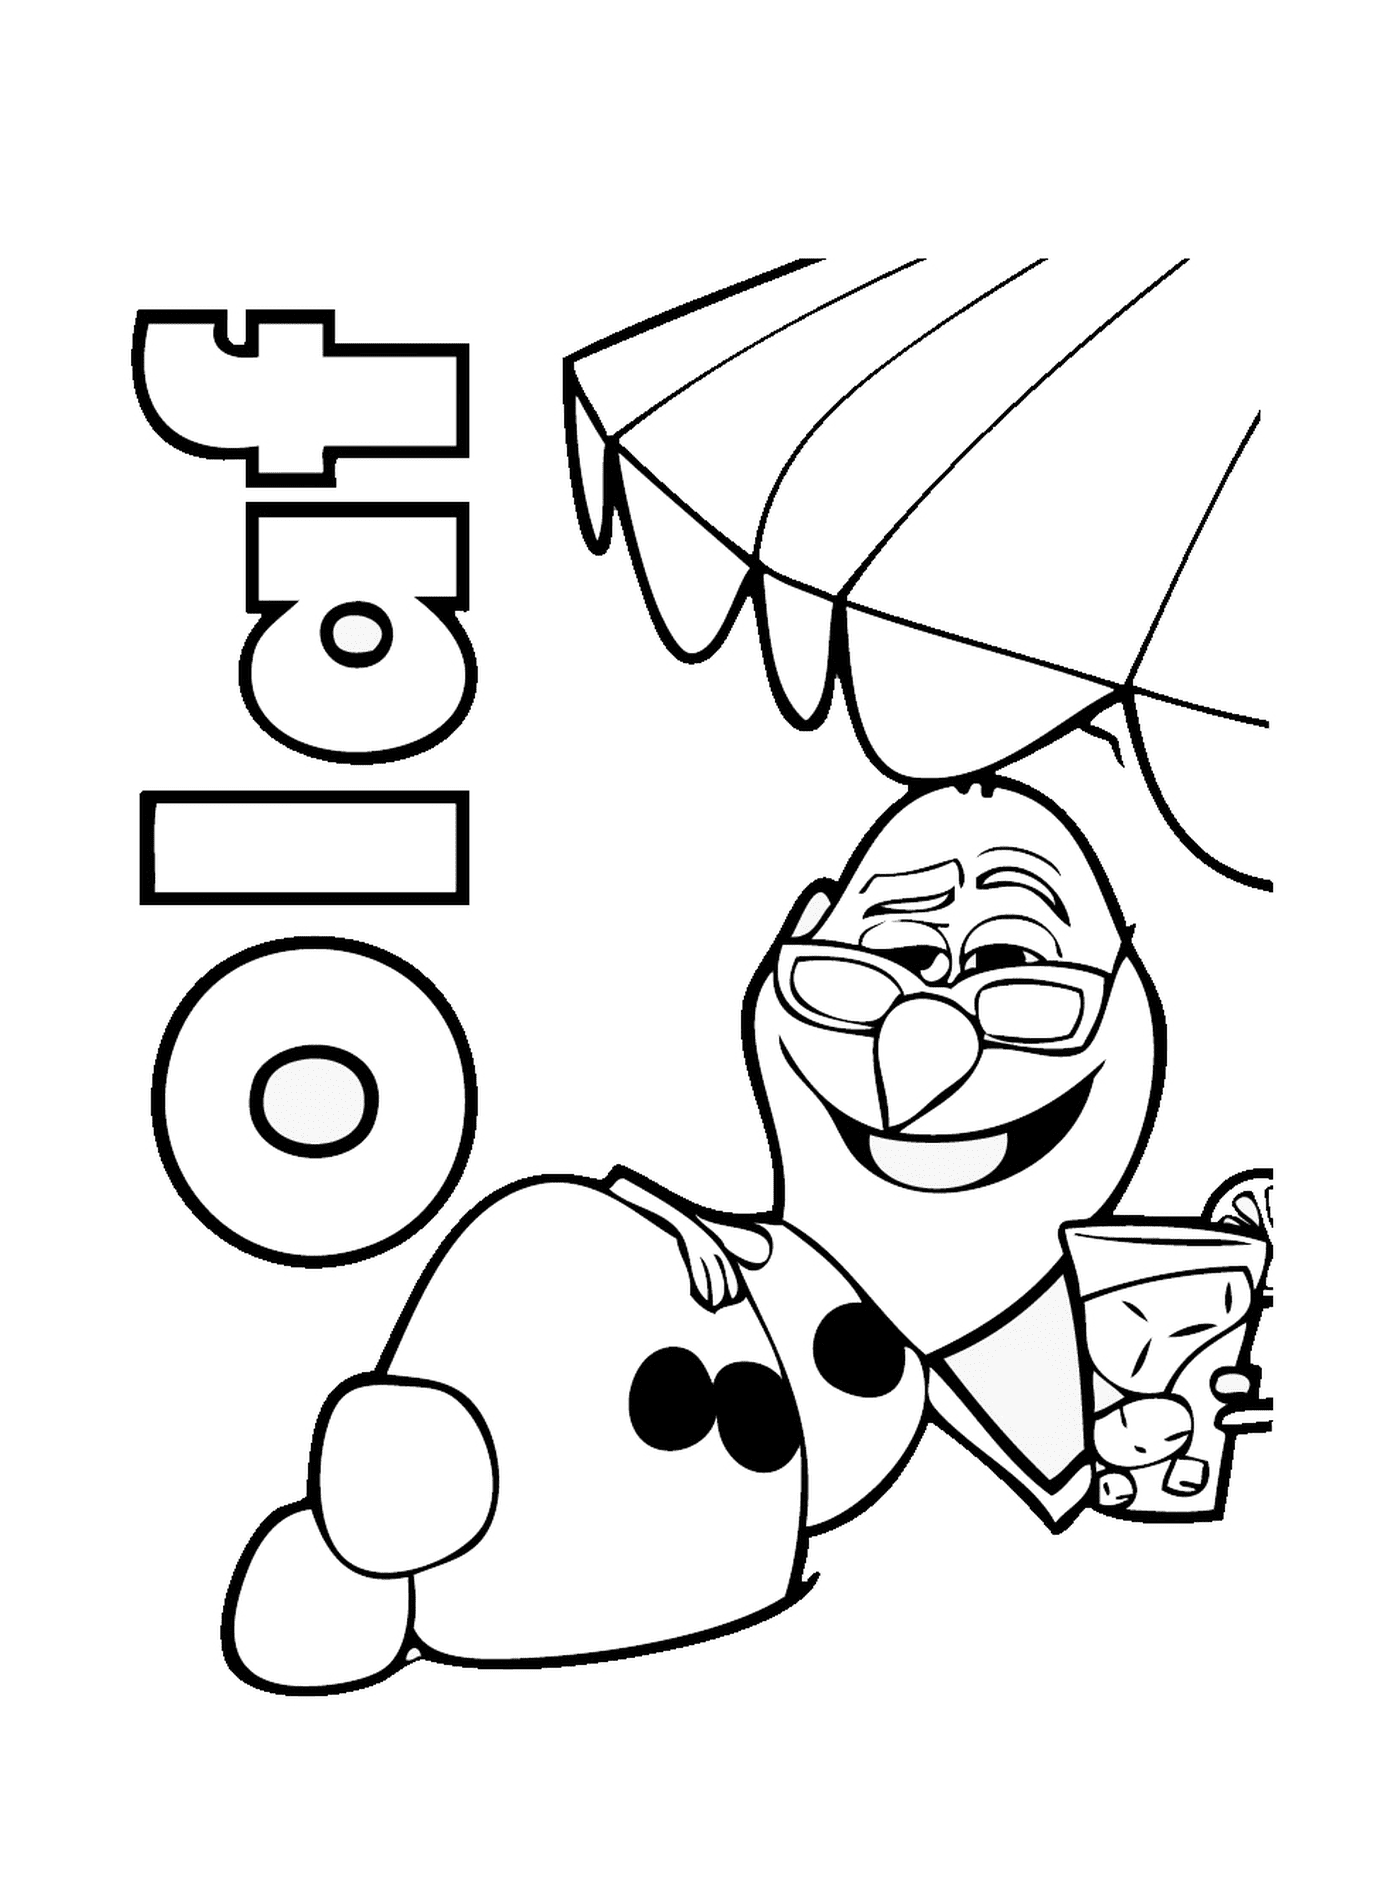 Olaf boit un the glace a la plage